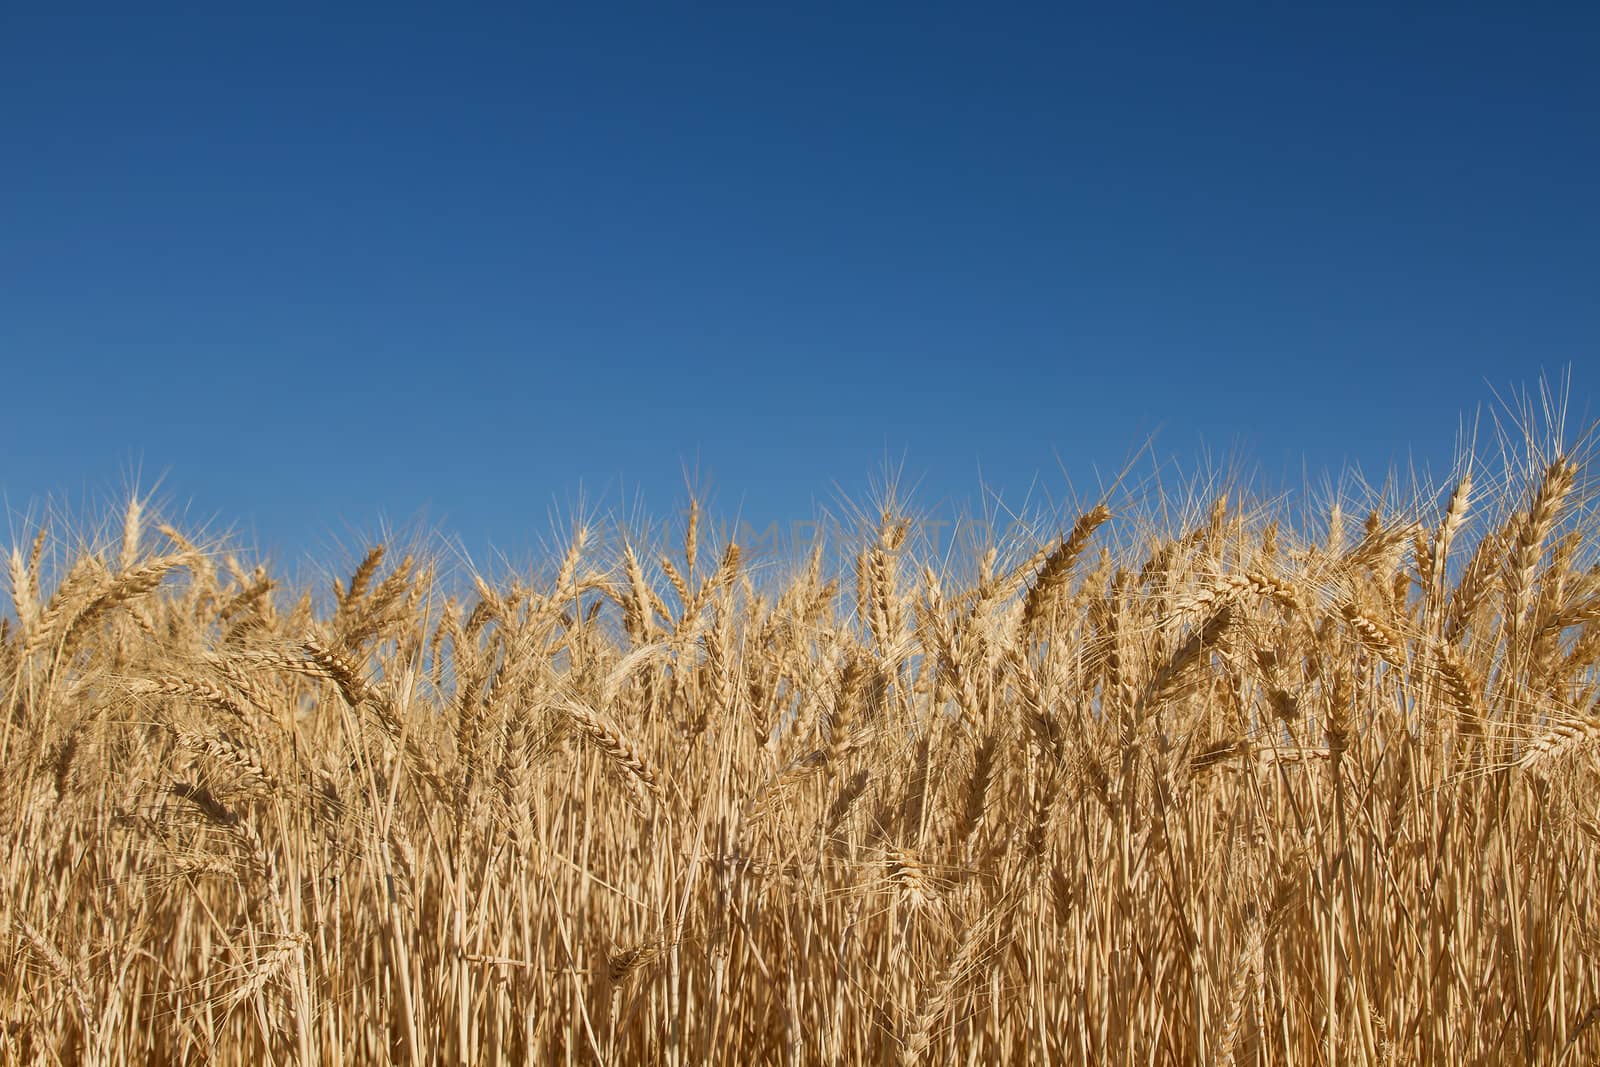 Wheat Grass Farm Field Against Clear Blue Sky Background